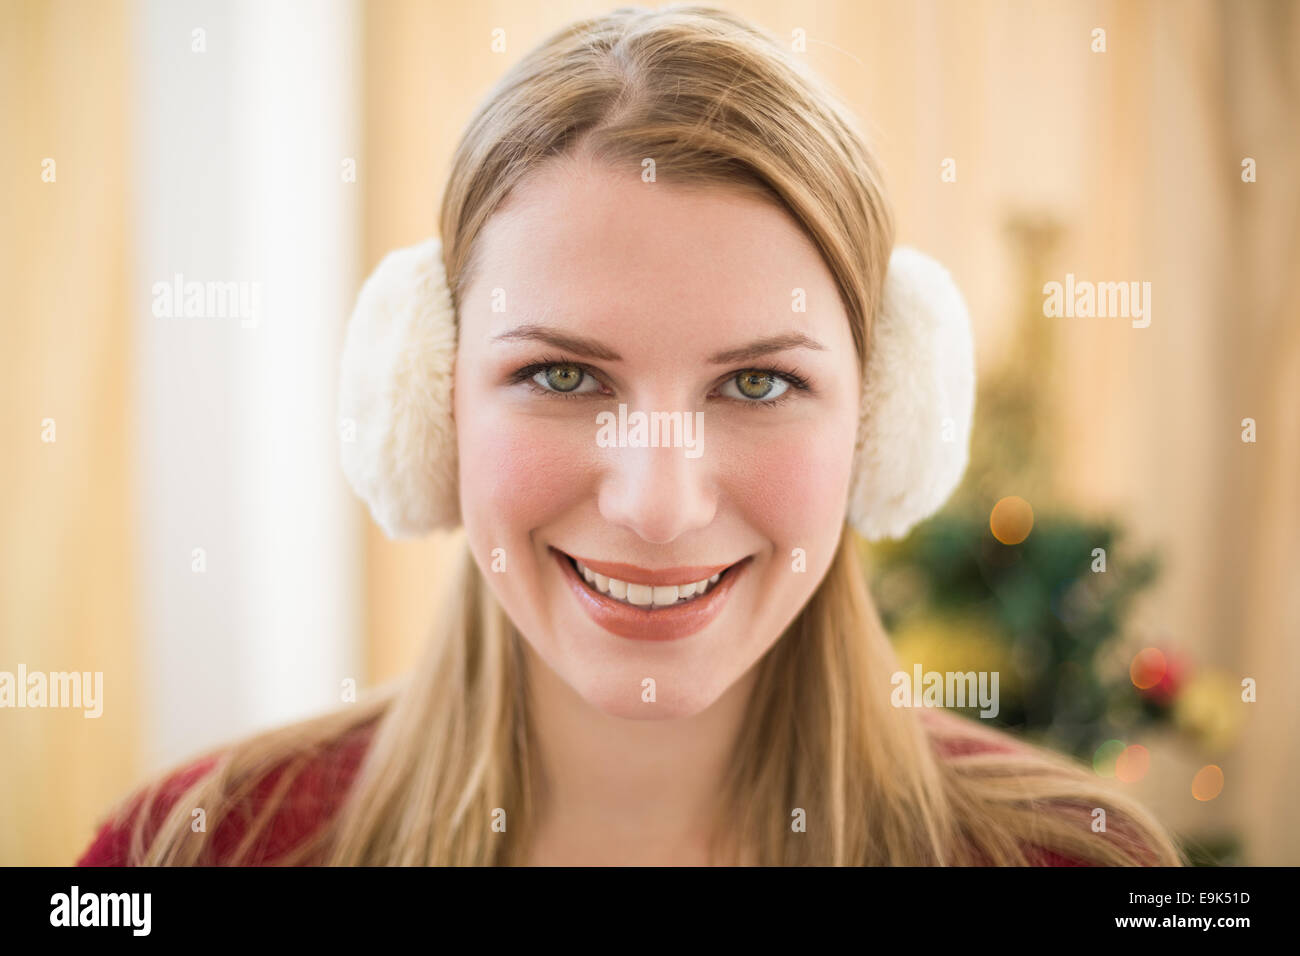 Portrait of a smiling blonde wearing earmuffs Stock Photo